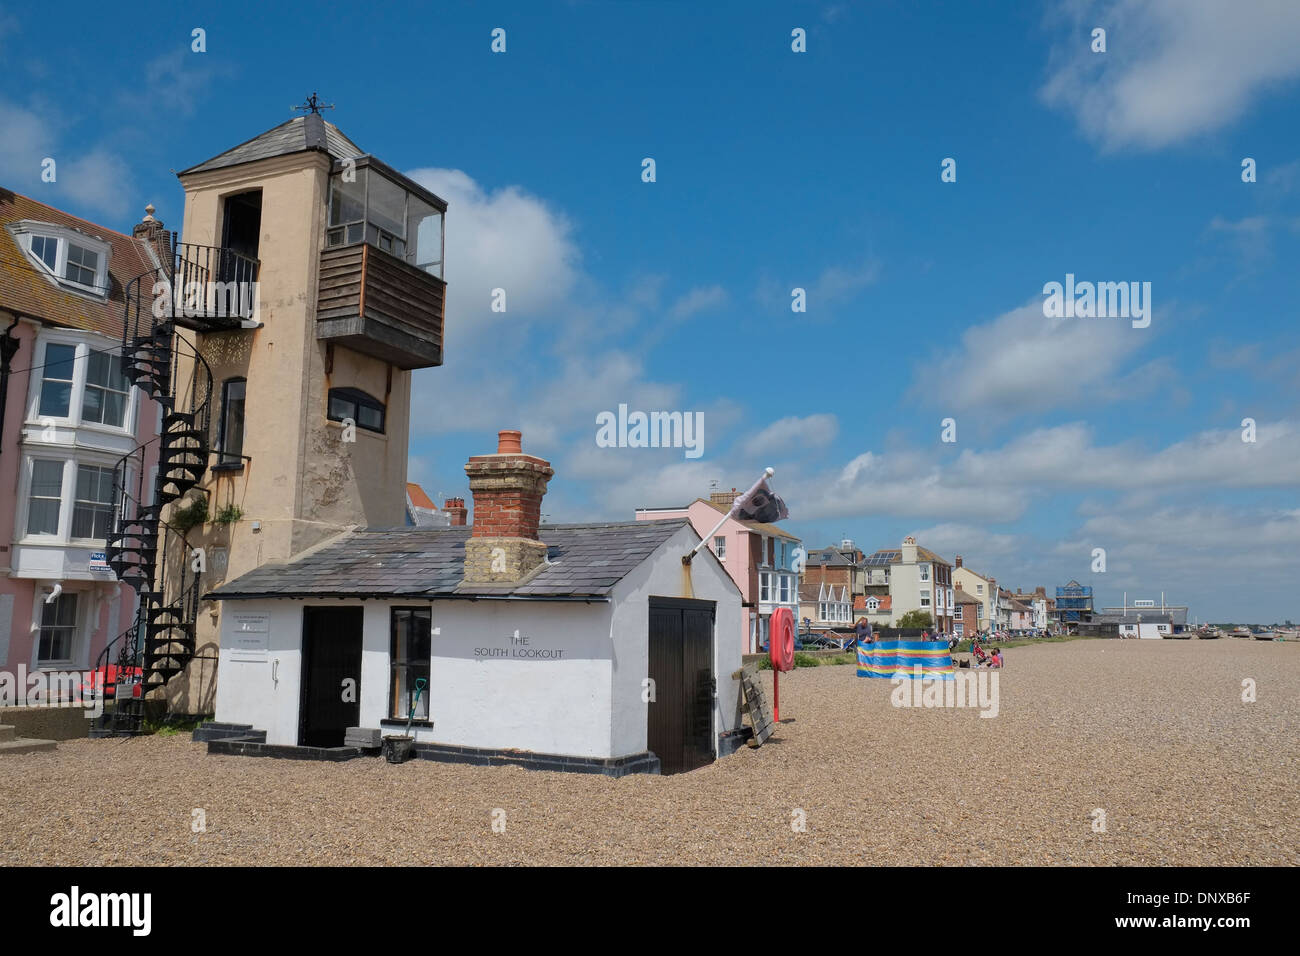 The Aldeburgh Beach South Lookout. Aldeburgh, Suffolk, England. Stock Photo